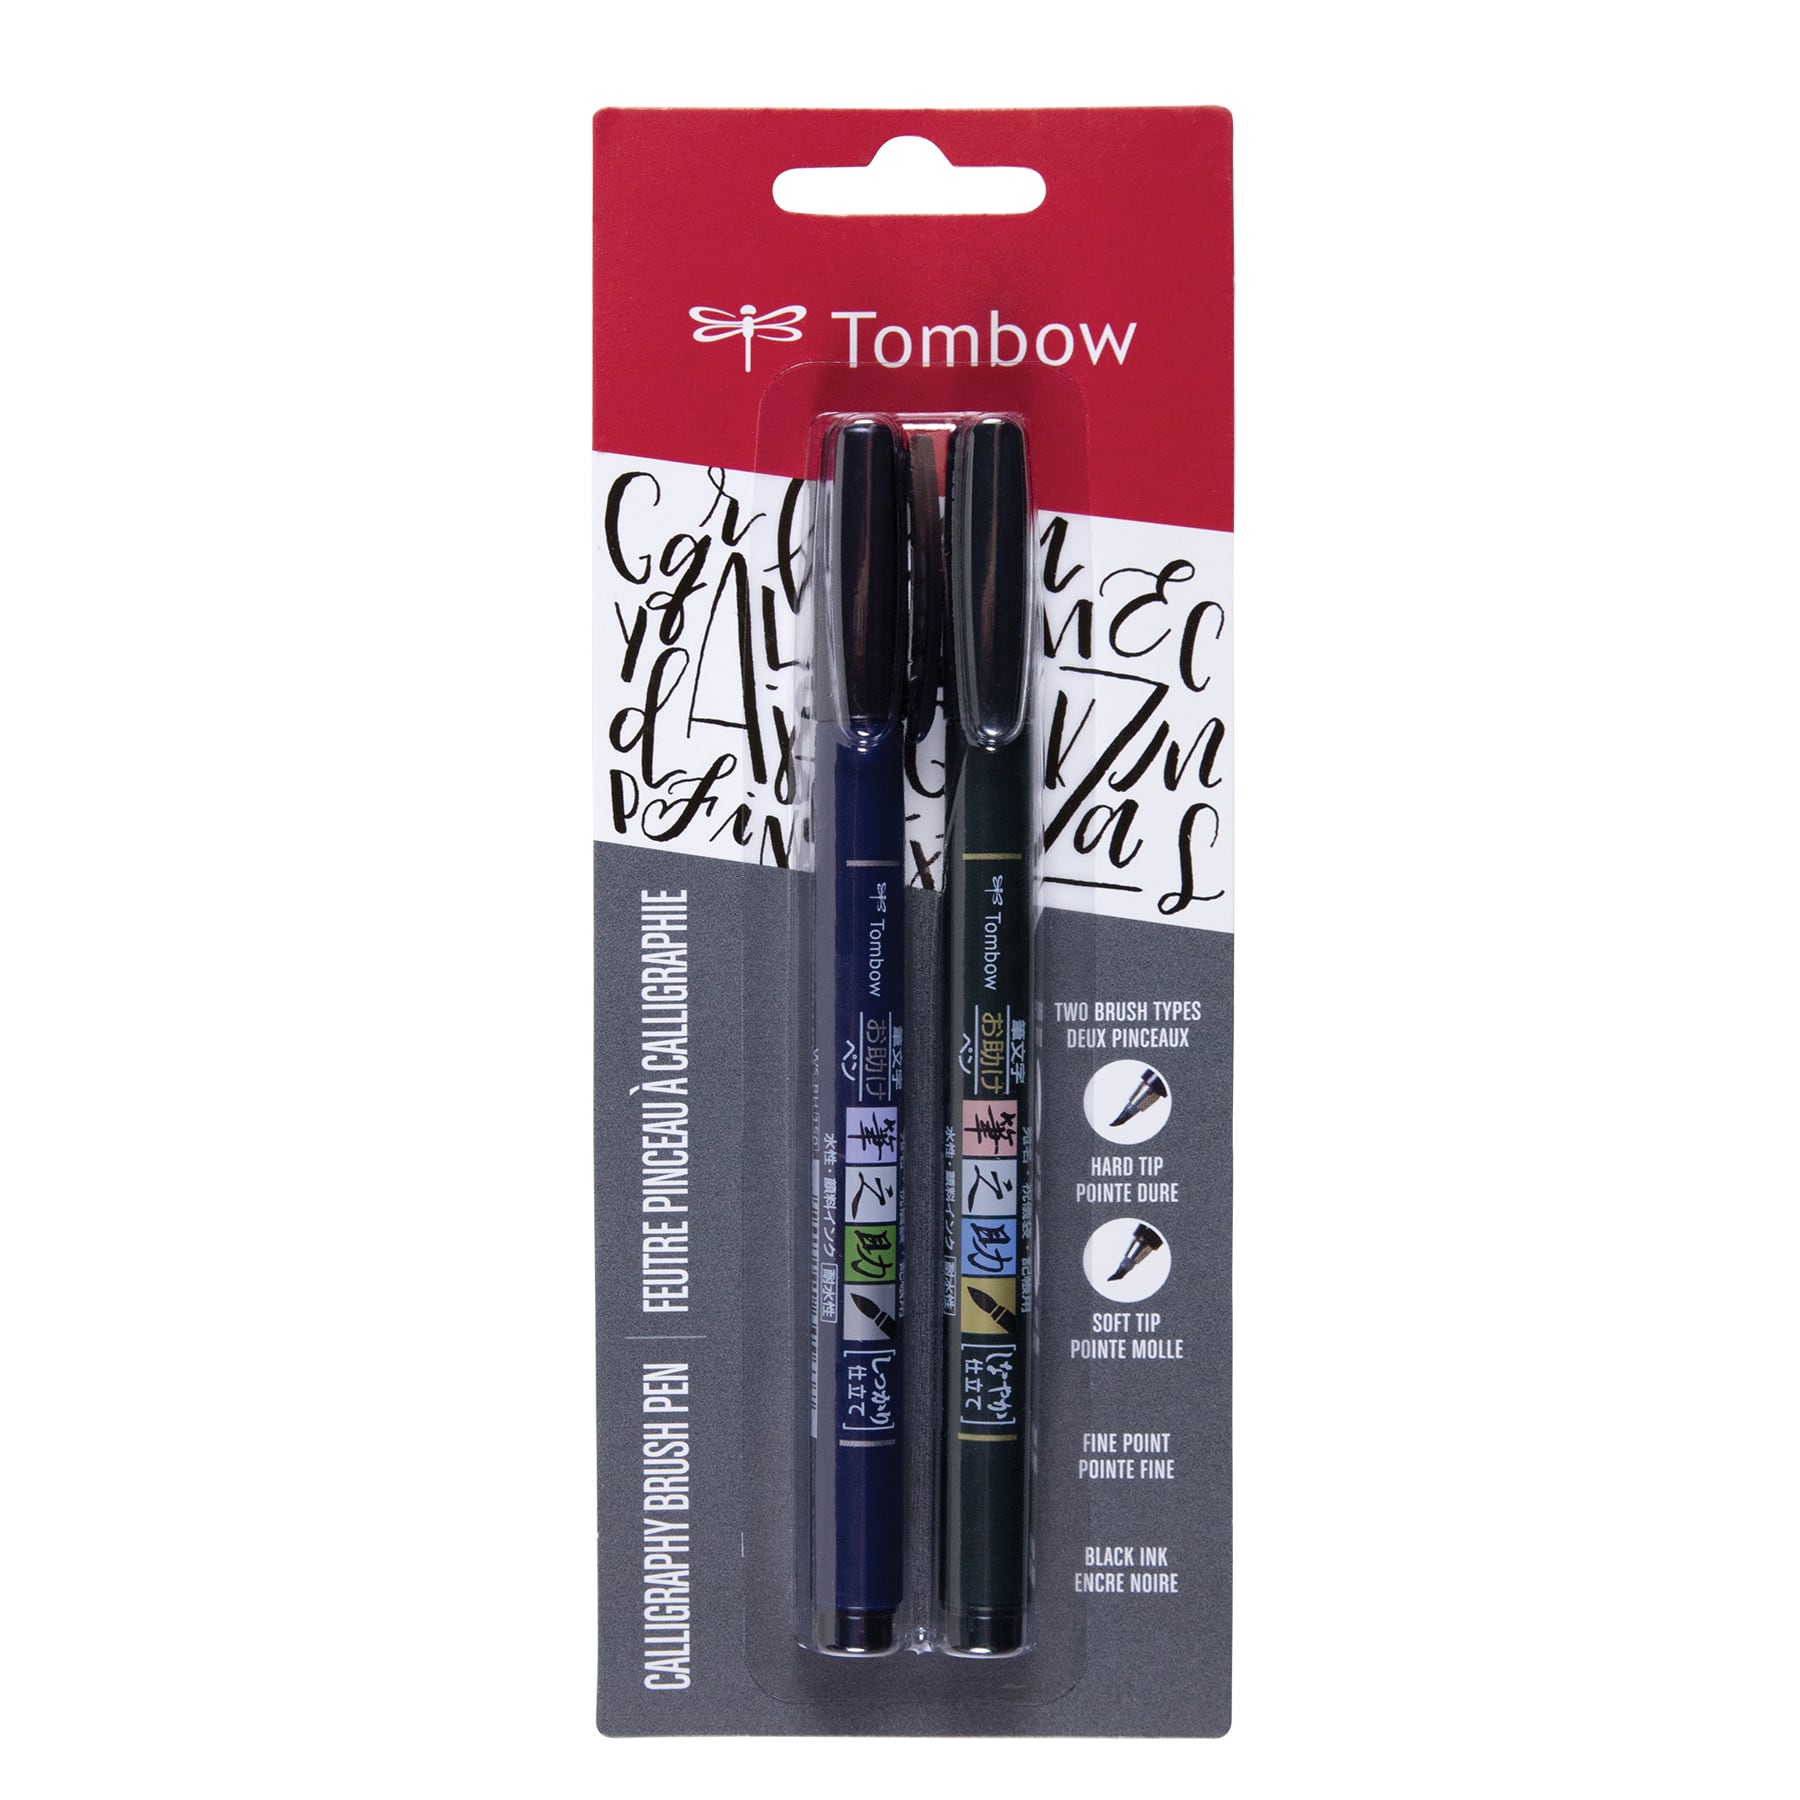  Tombow 62038 Fudenosuke Brush Pen, 2-Pack. Soft and Hard Tip Fudenosuke  Brush Pens for Calligraphy and Art Drawings : Arts, Crafts & Sewing